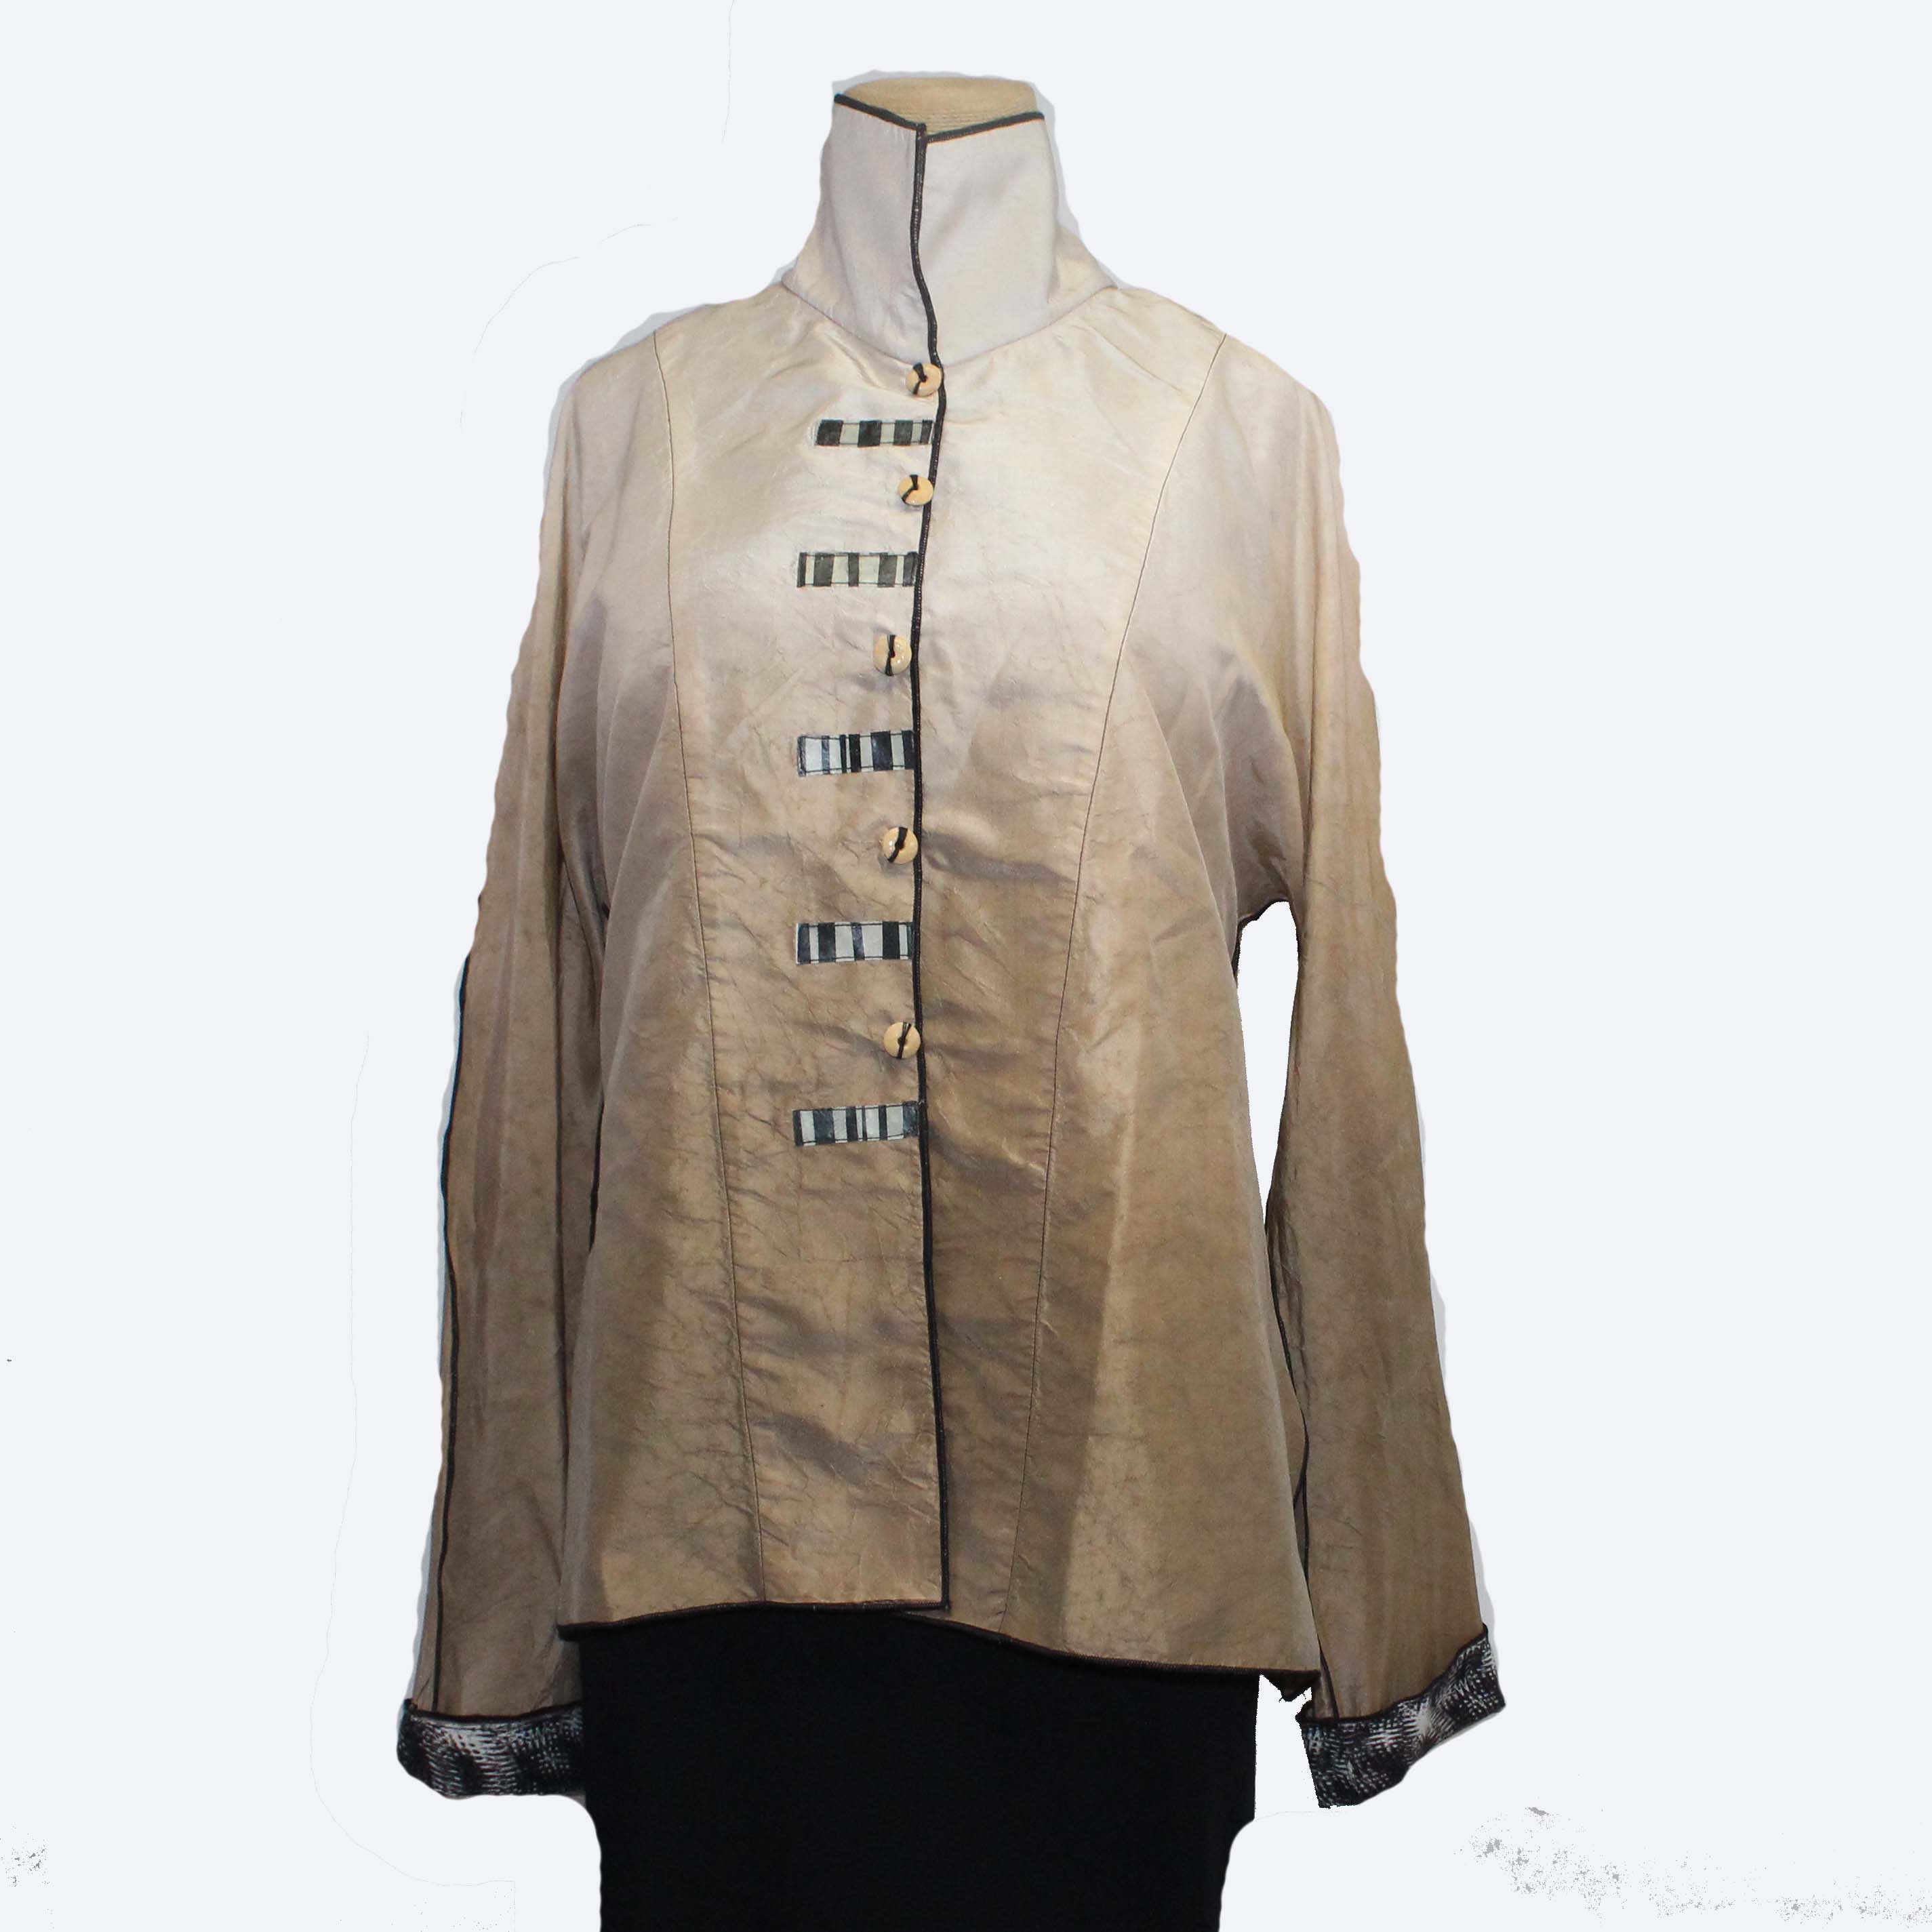 Deborah Cross Shirt, Ecru/Tan, S